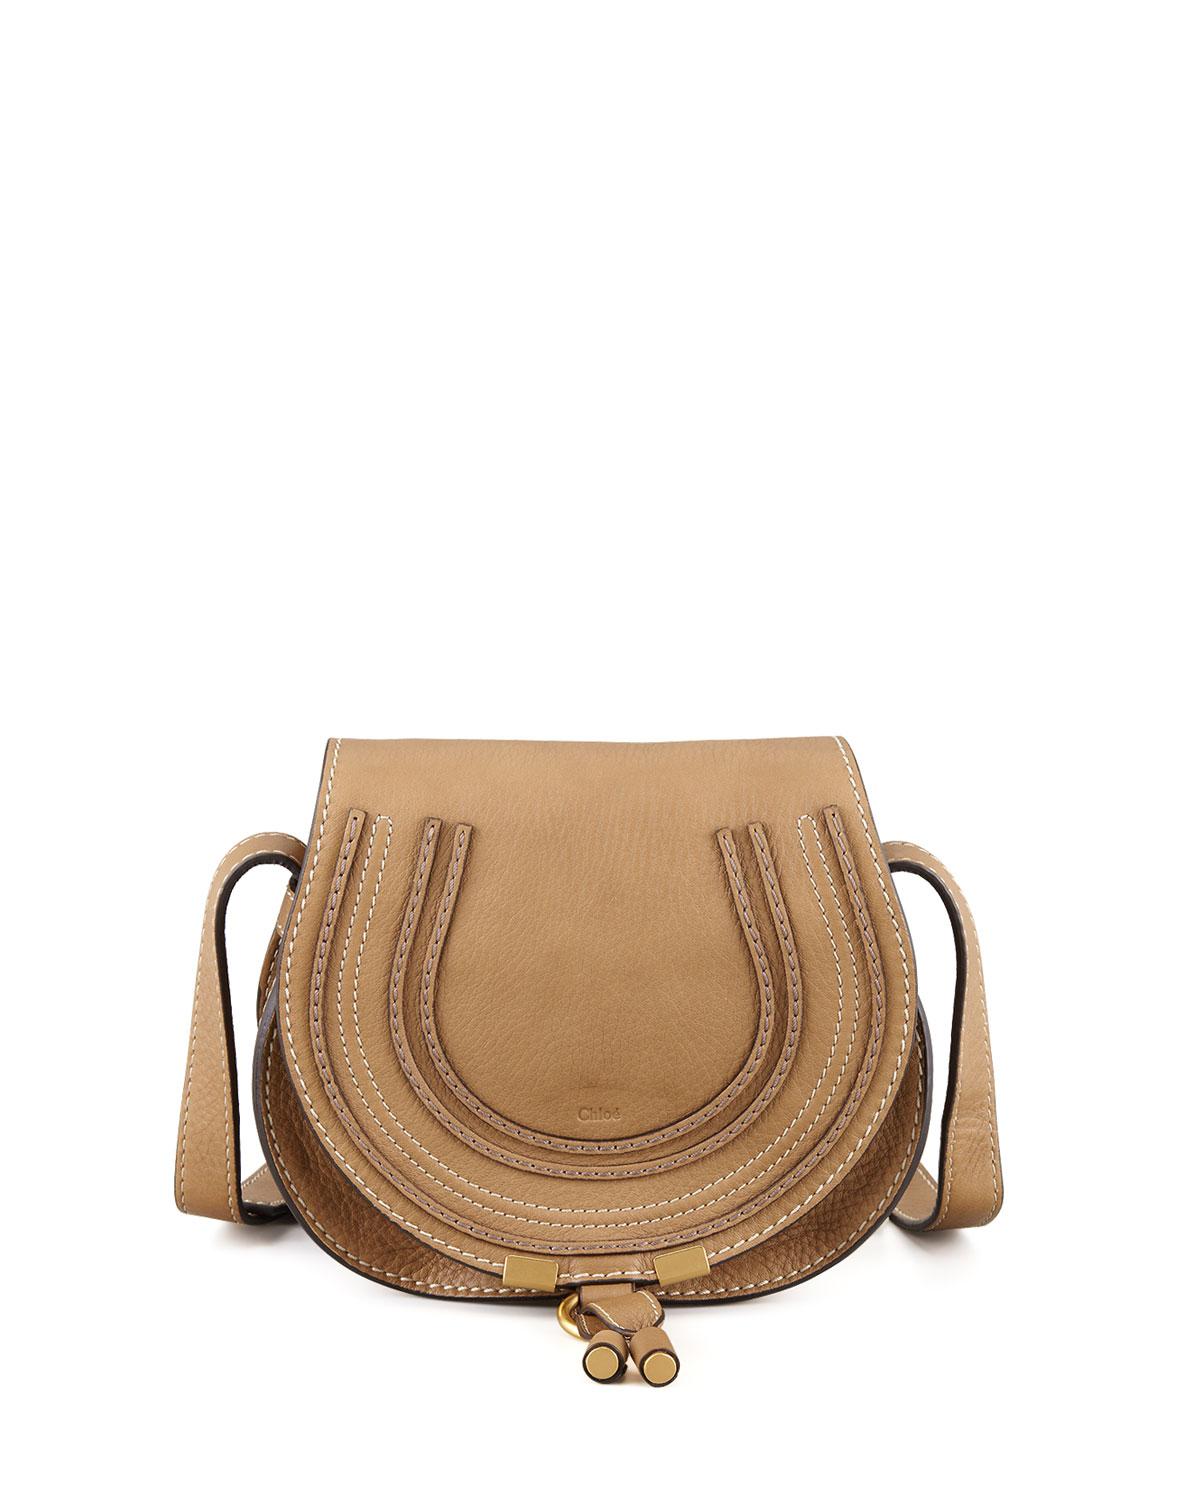 Chloé Marcie Small Leather Crossbody Bag in Brown - Lyst